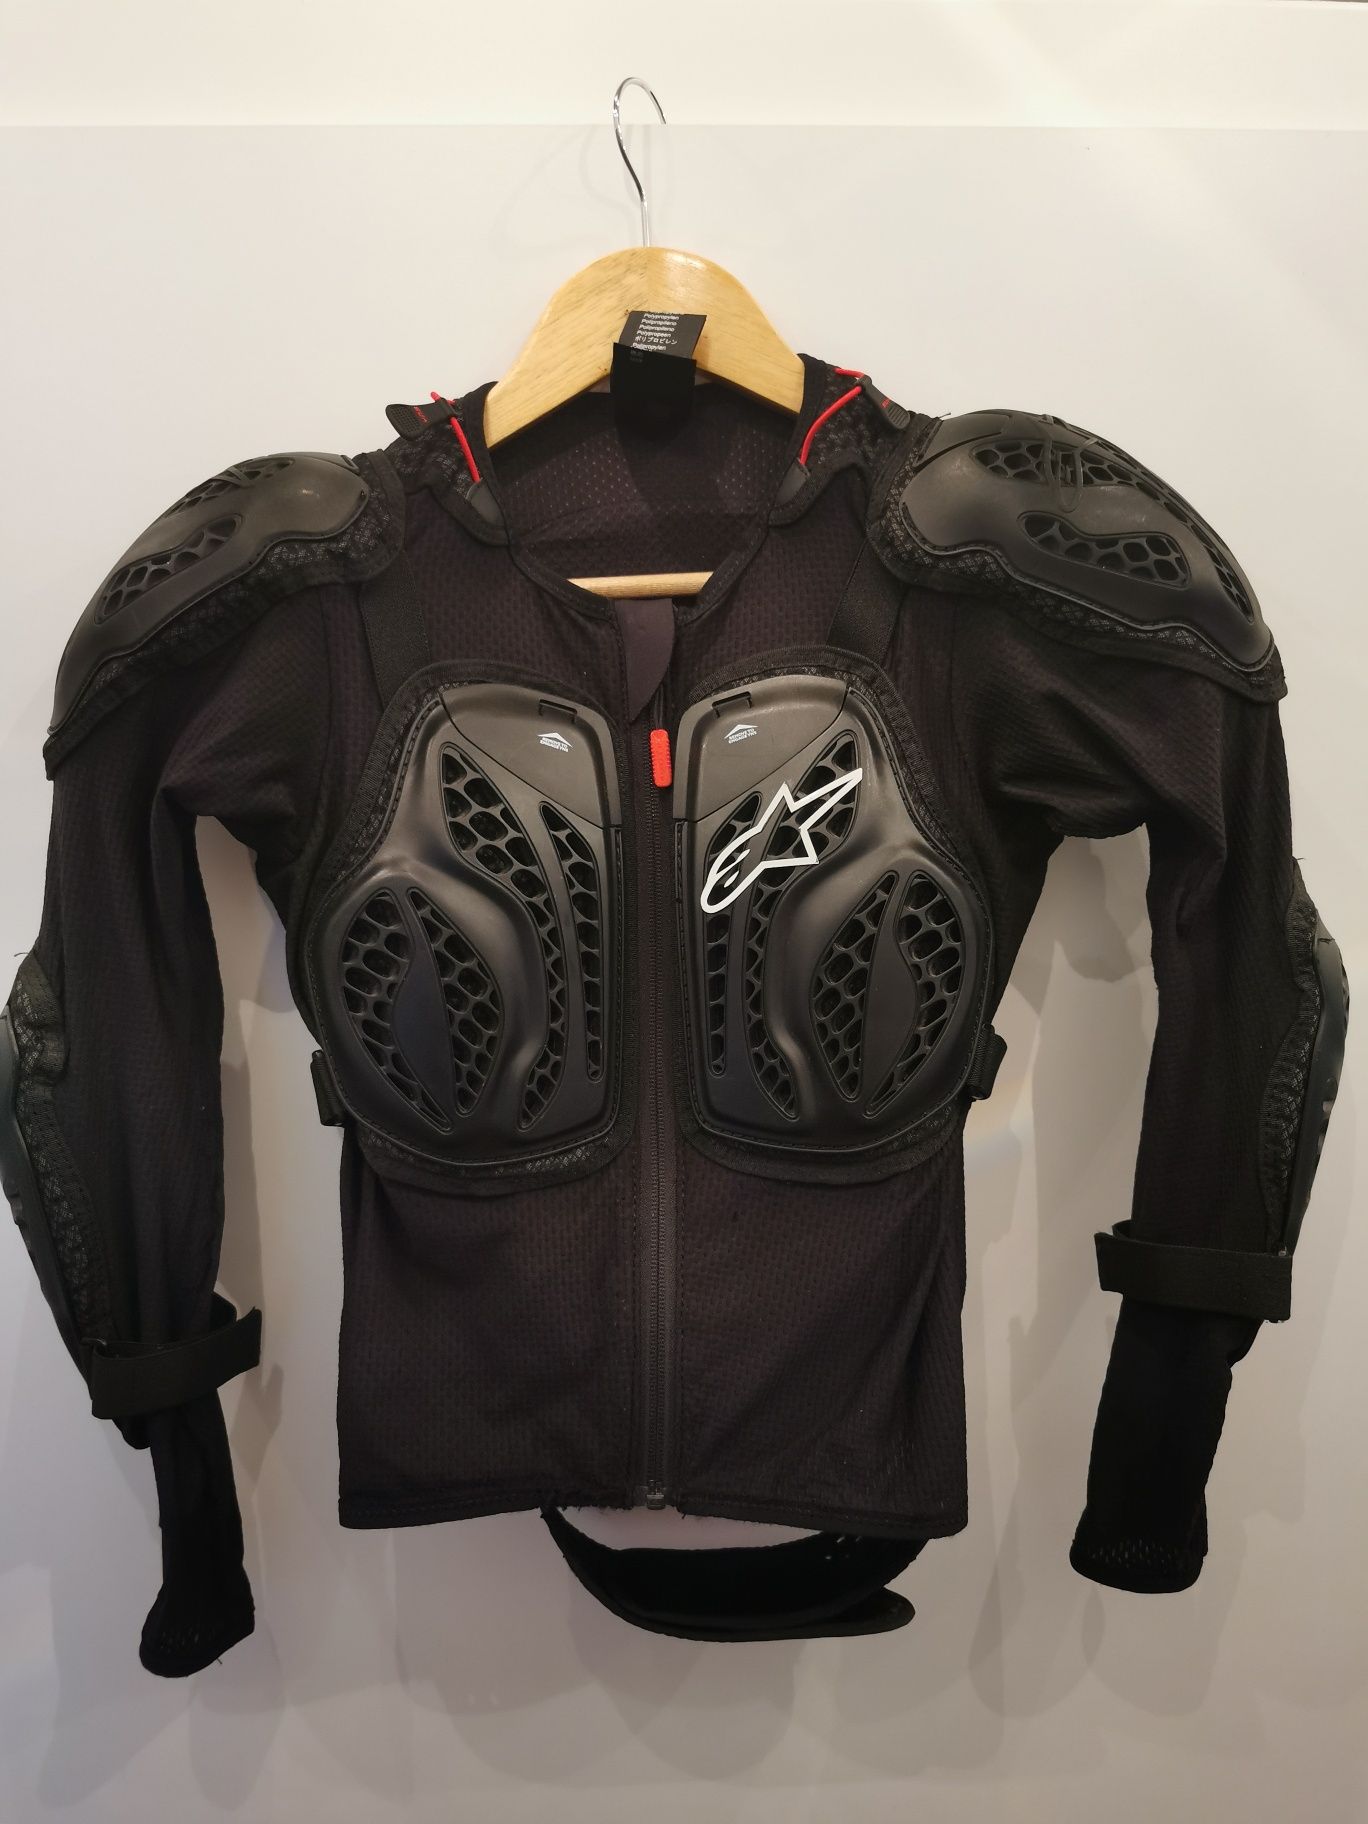 Zbroja Alpinestars Youth Bionic Action Jacket gr. L/XL